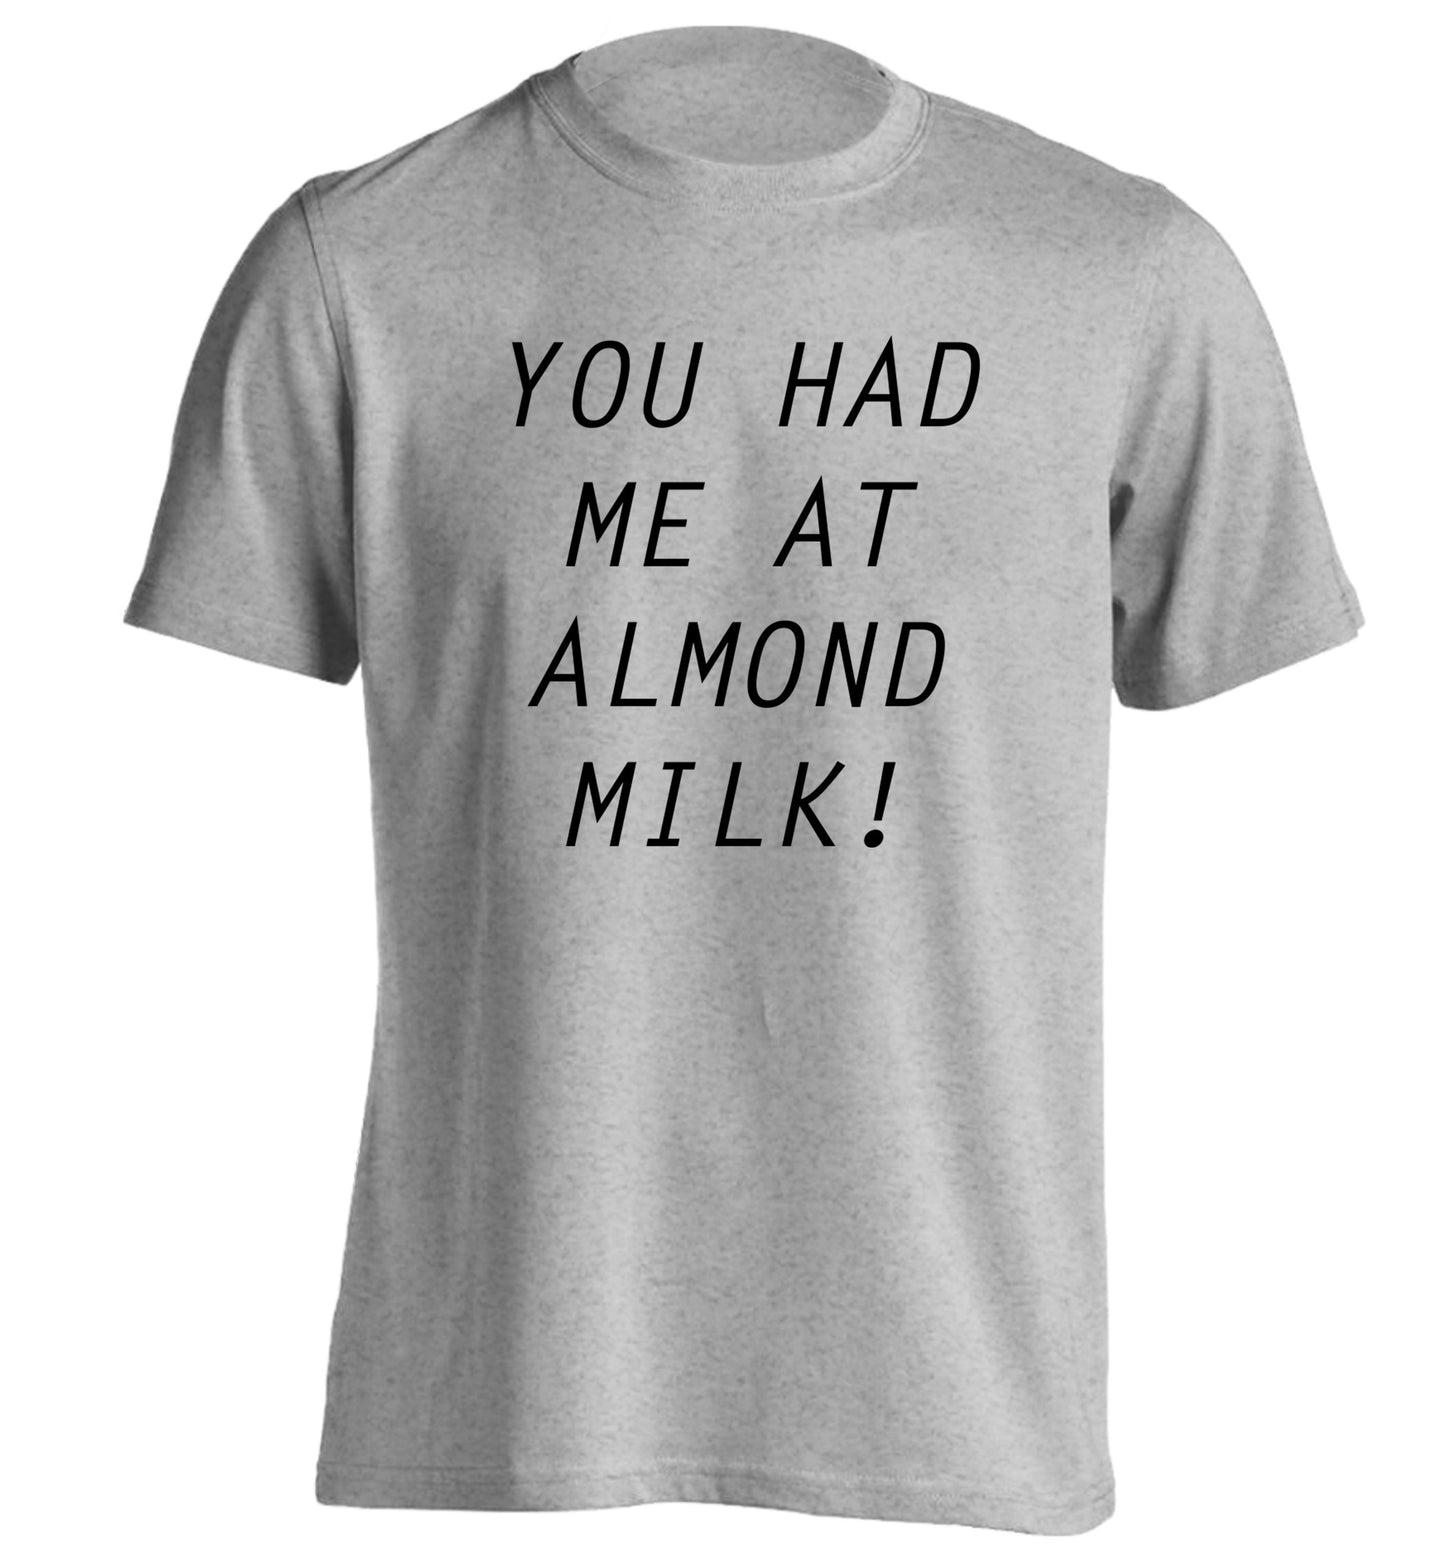 You had me at almond milk adults unisex grey Tshirt 2XL